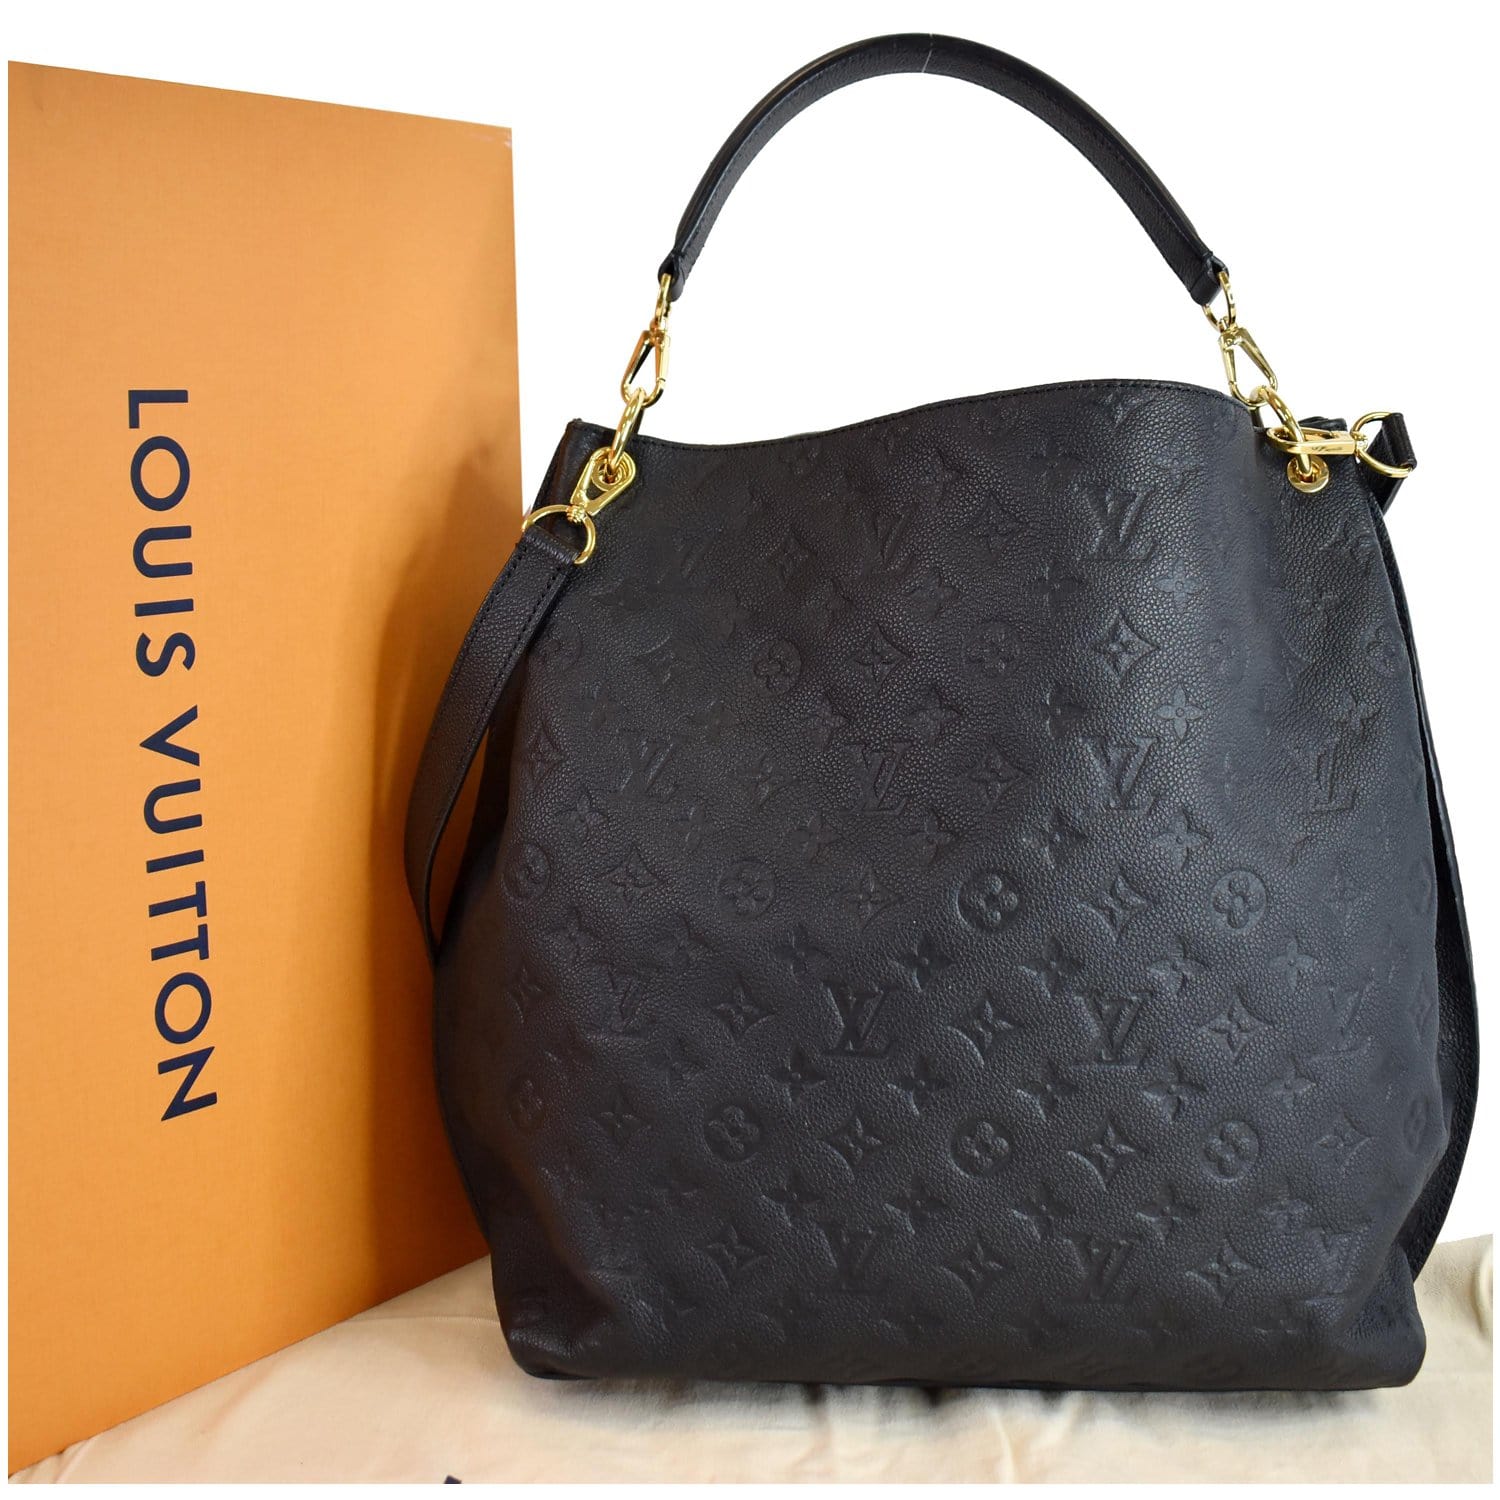 Louis Vuitton Black Leather Embossed Top Handle Hobo Shoulder Bag